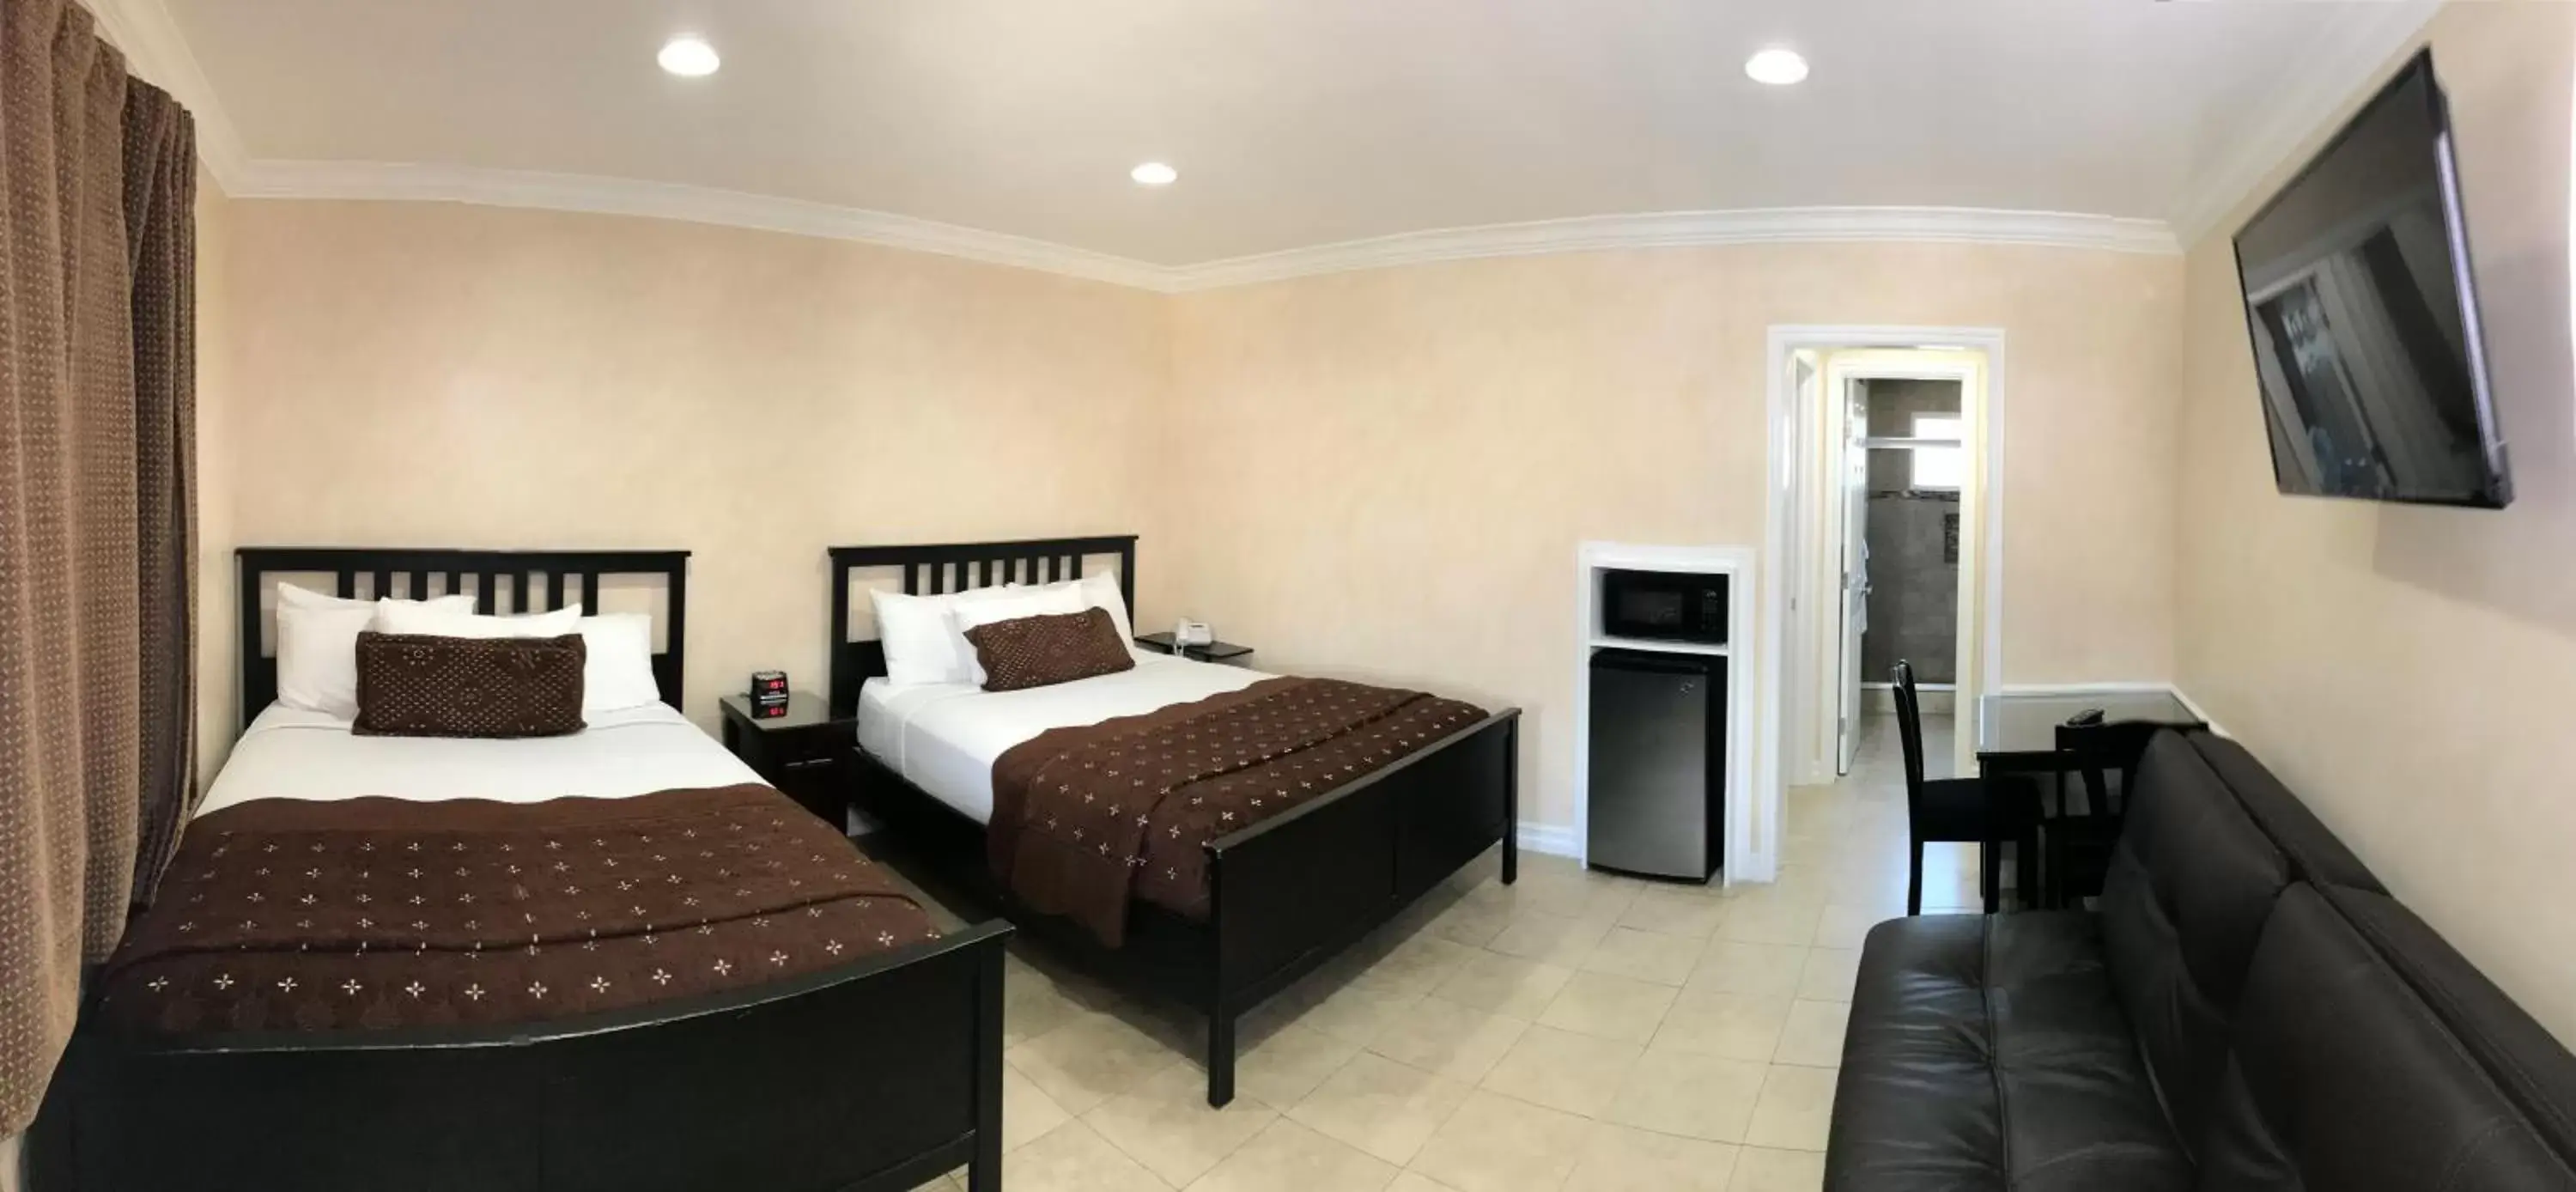 Bedroom, Bed in Nite Inn at Universal City